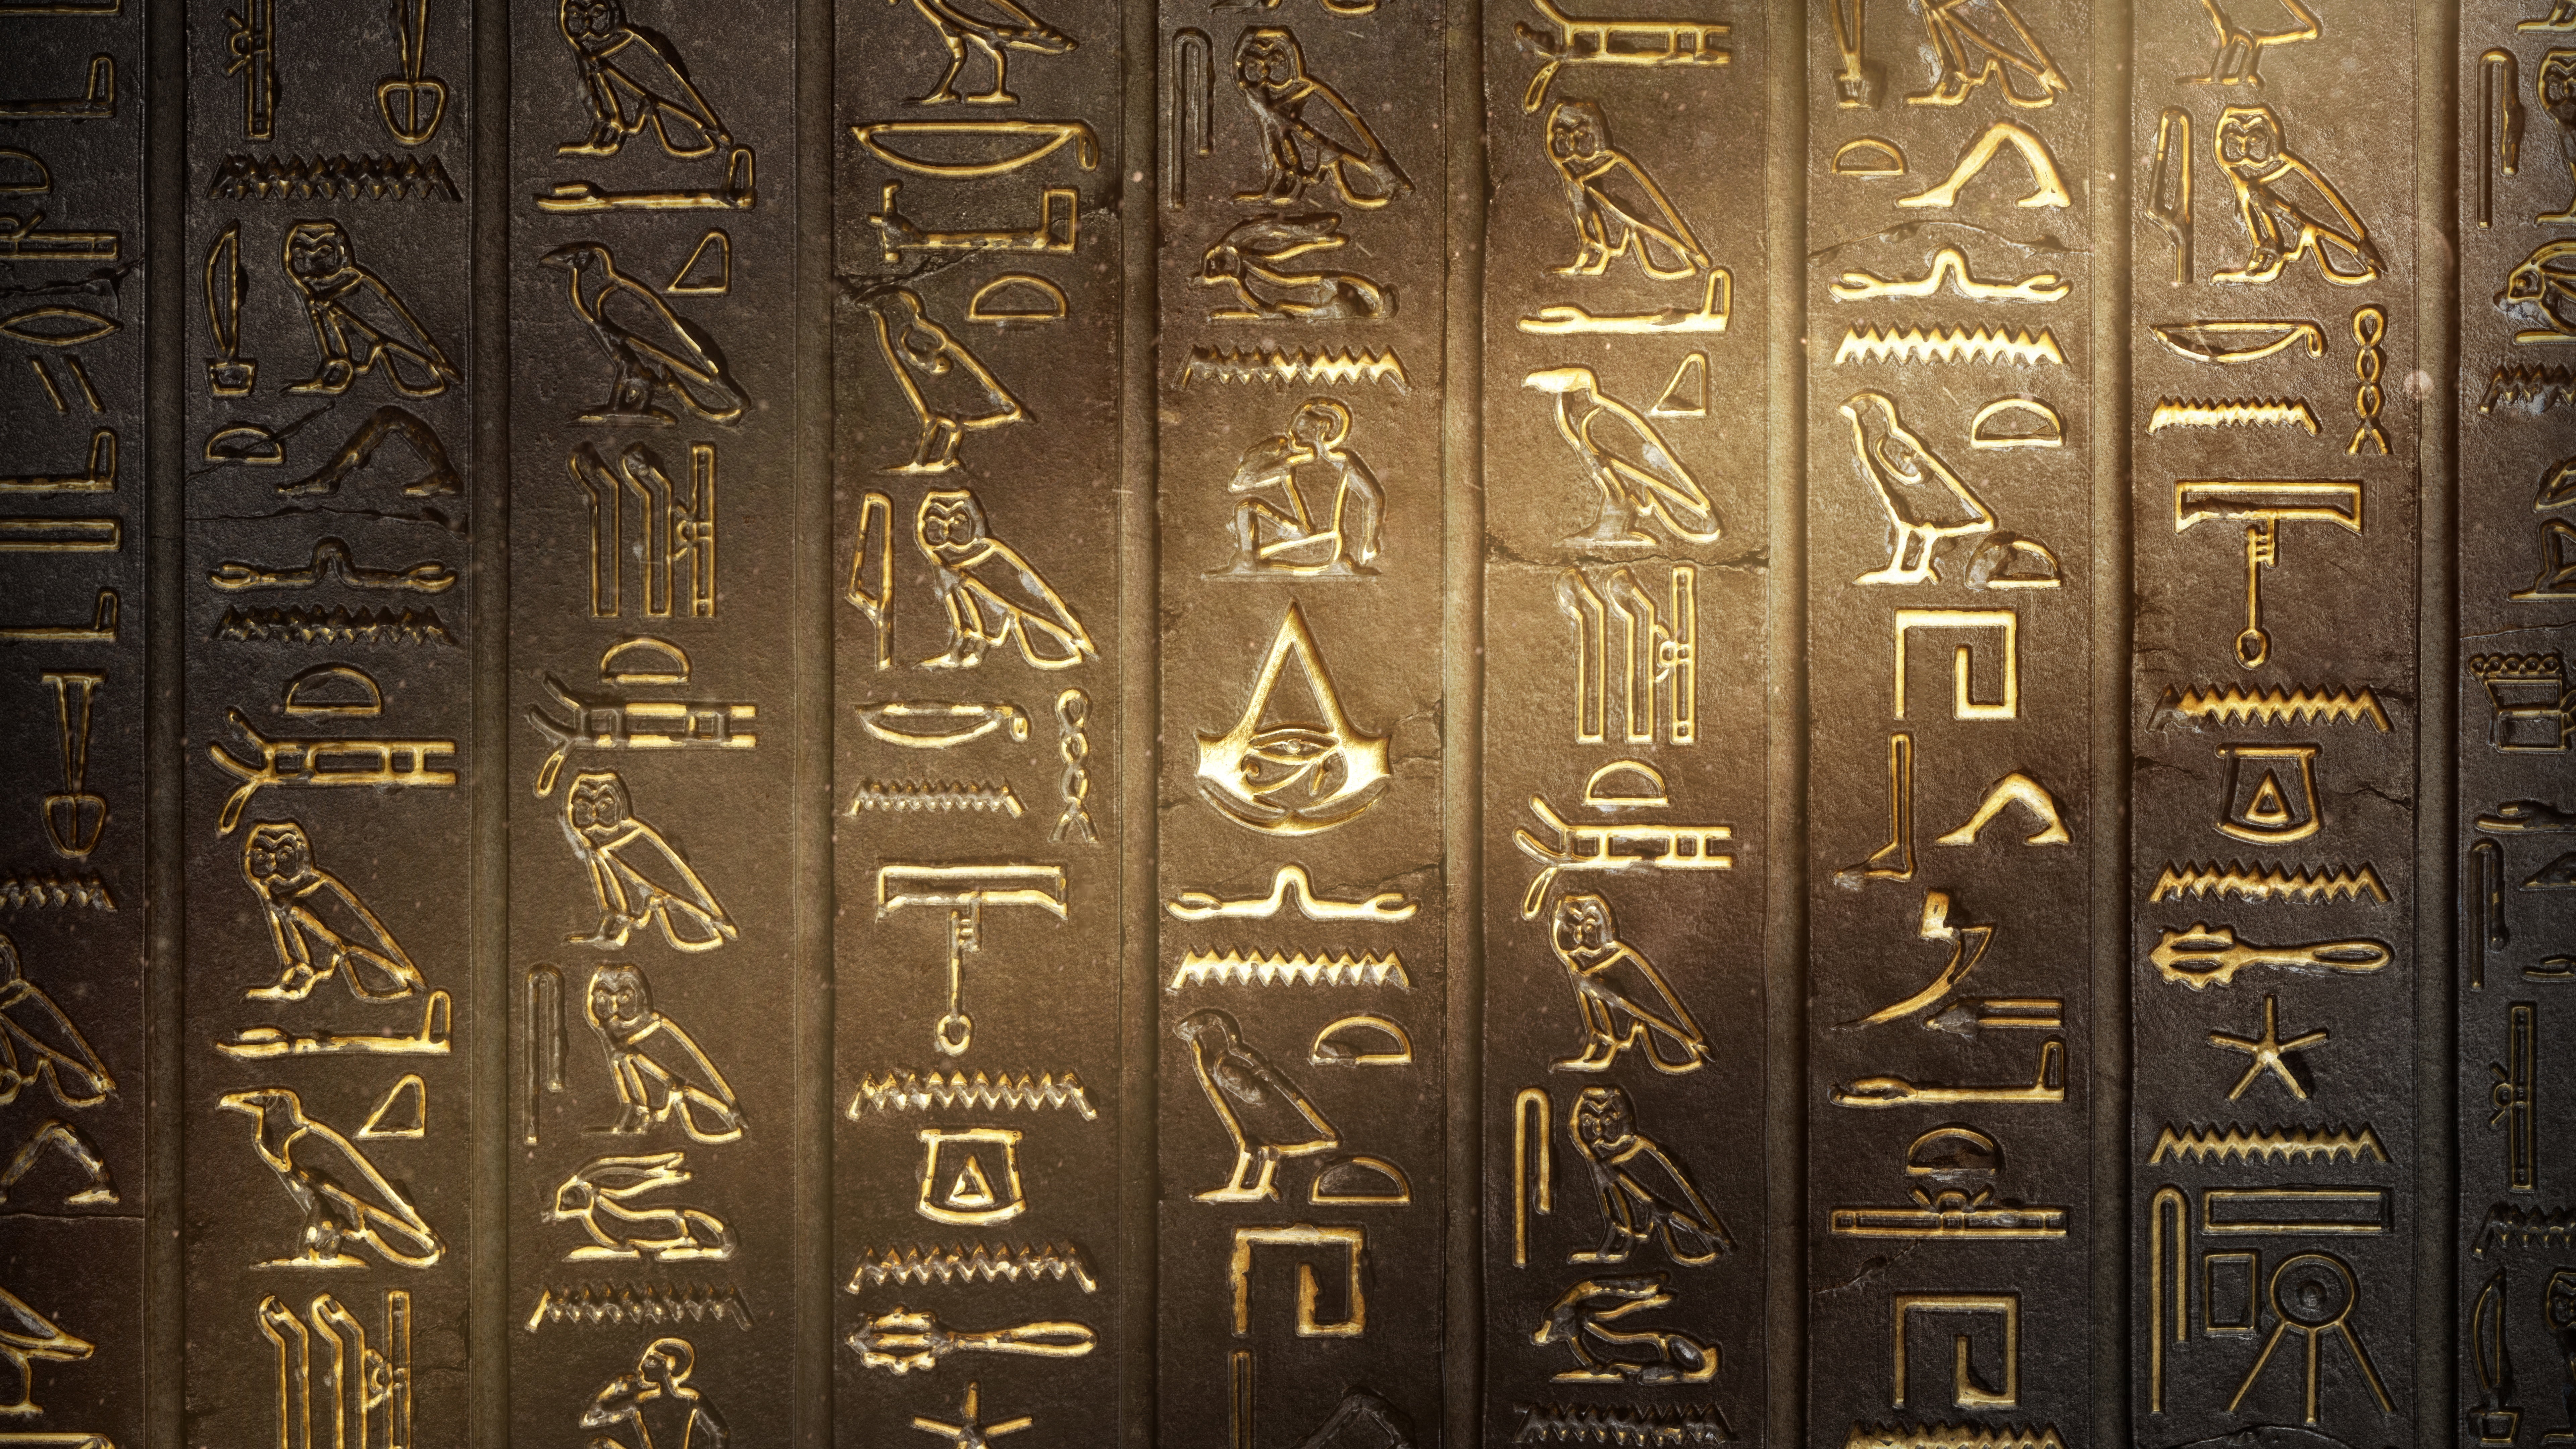 Egyptian engraved art, video games, Assassin's Creed, wall, hieroglyphs